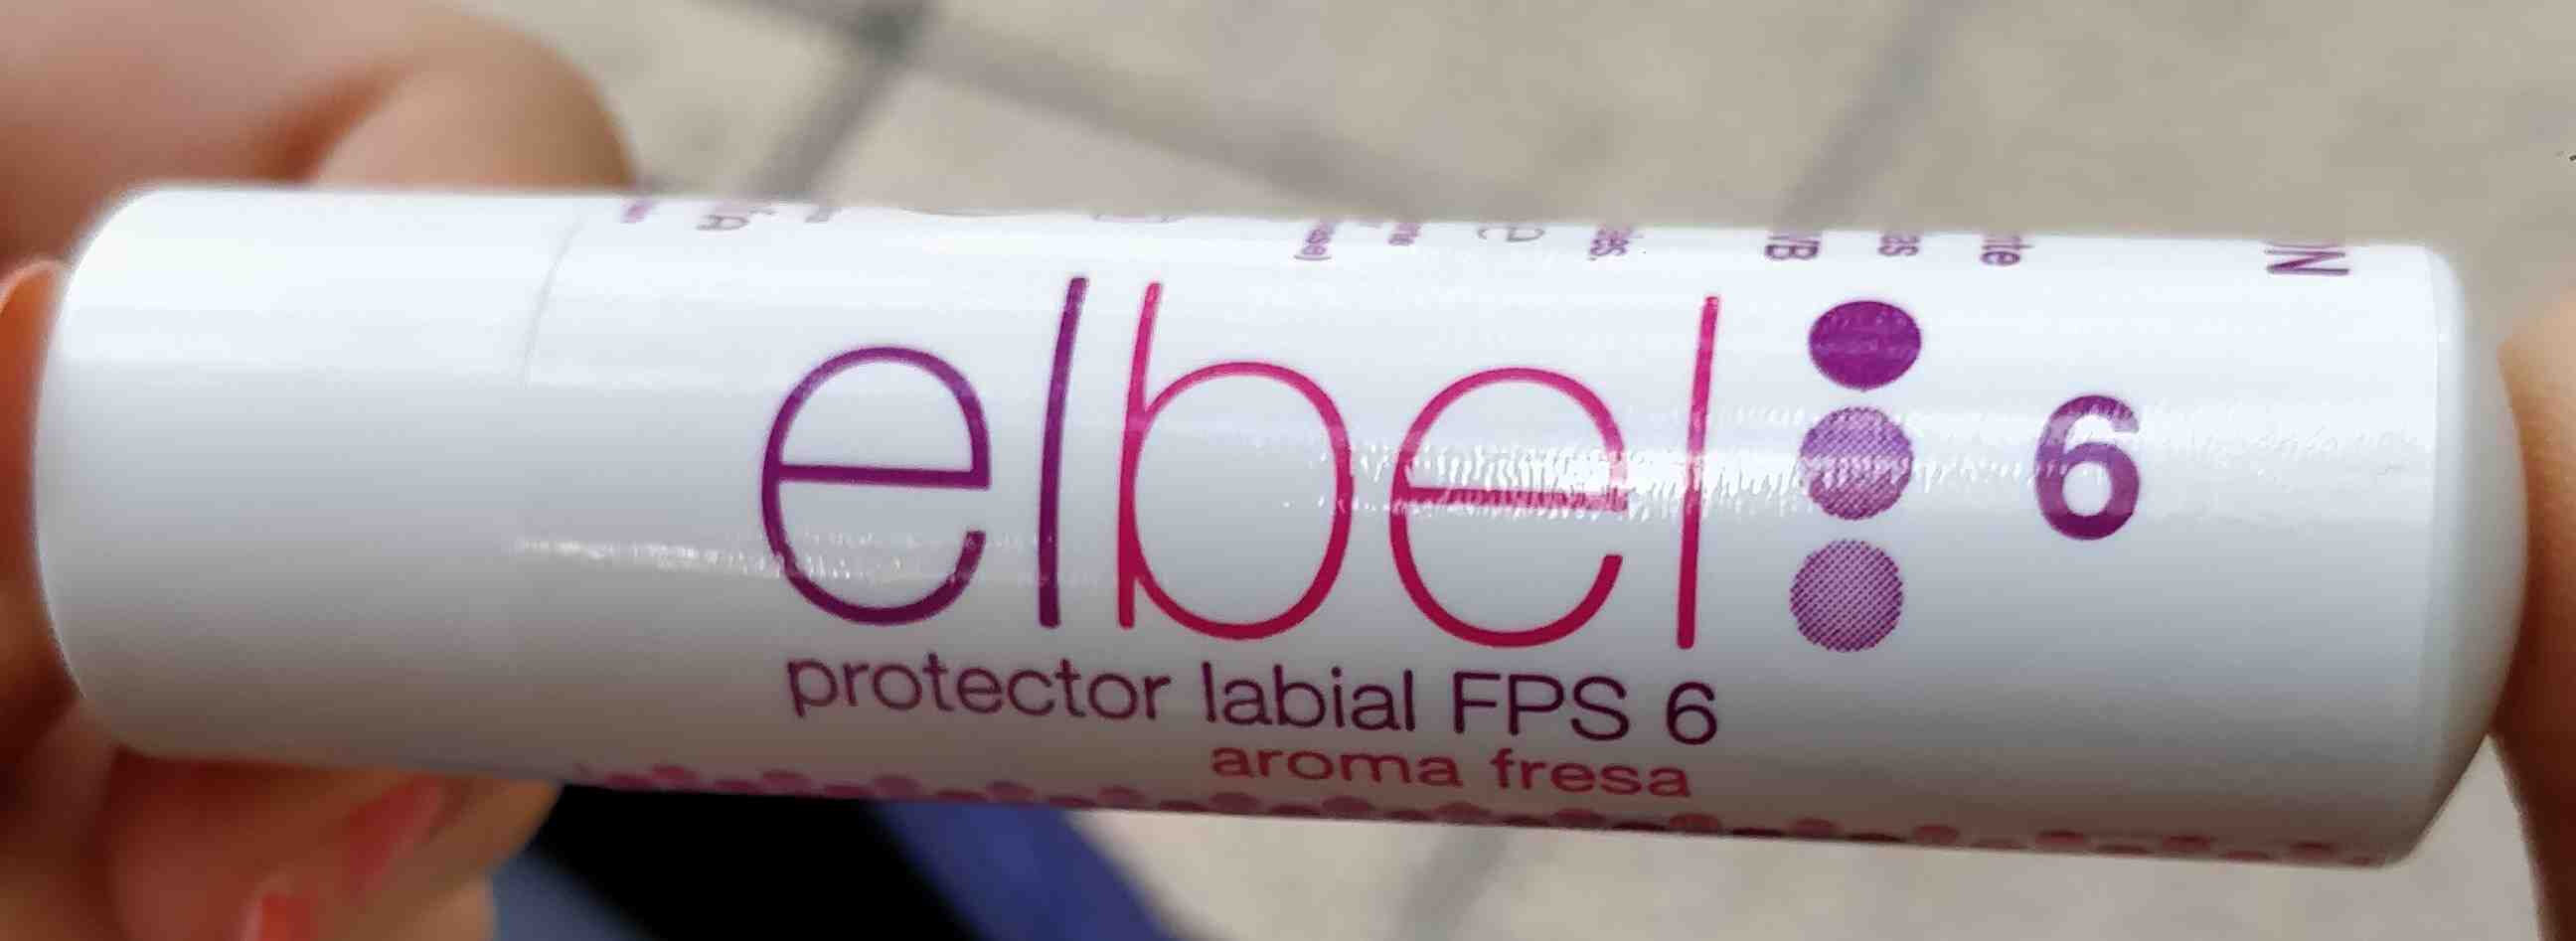 Protector labial FPS 6 aroma fresa - Producte - en